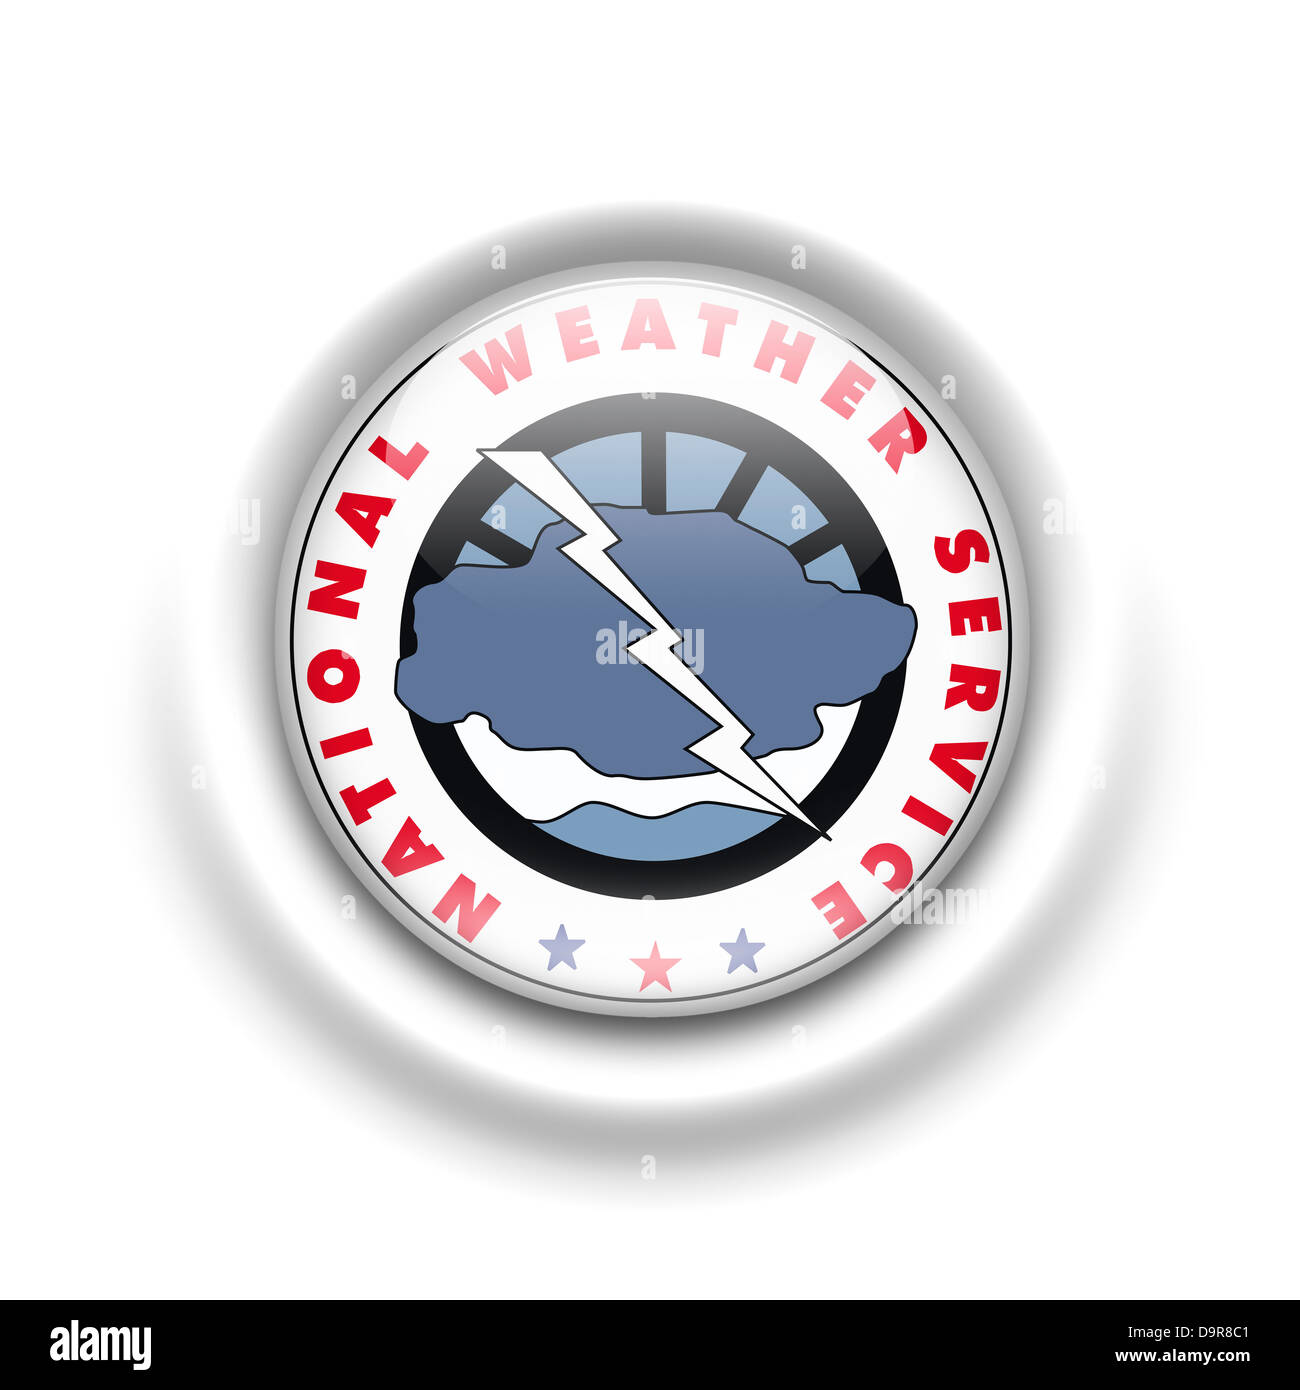 National Weather Service logo symbol icon flag Stock Photo